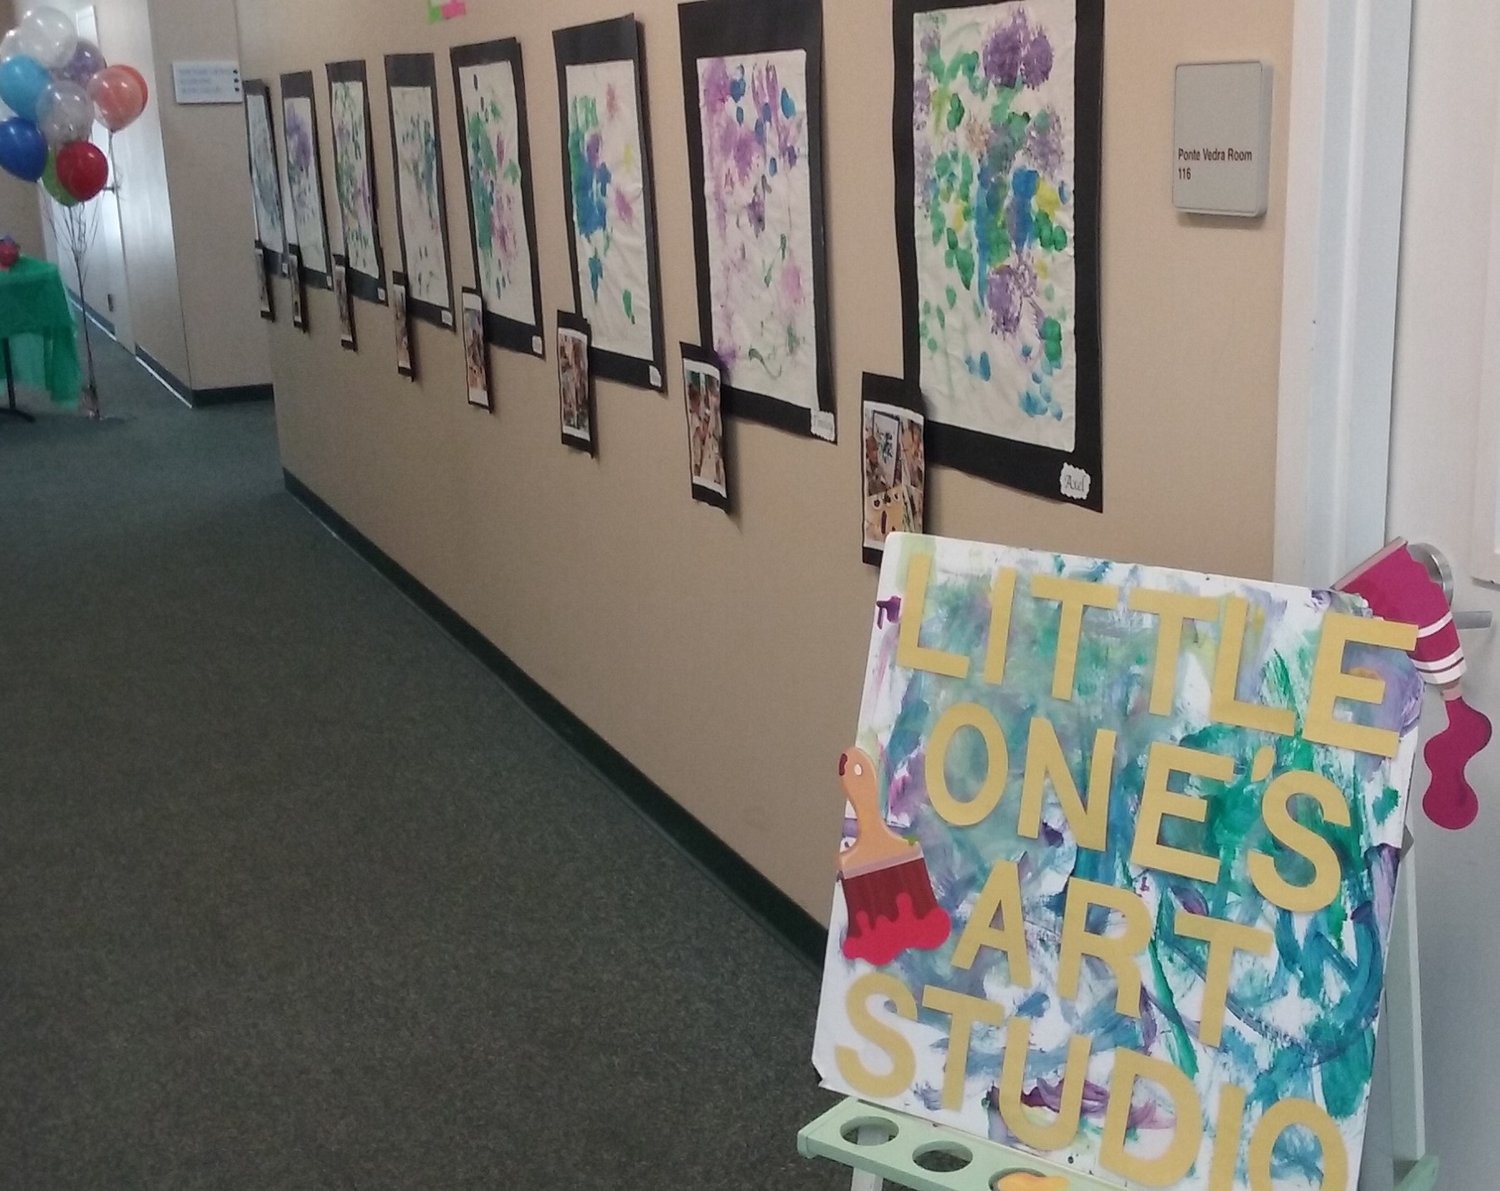 Children’s art decorates a hallway at the Promisetown Preschool Art Show.